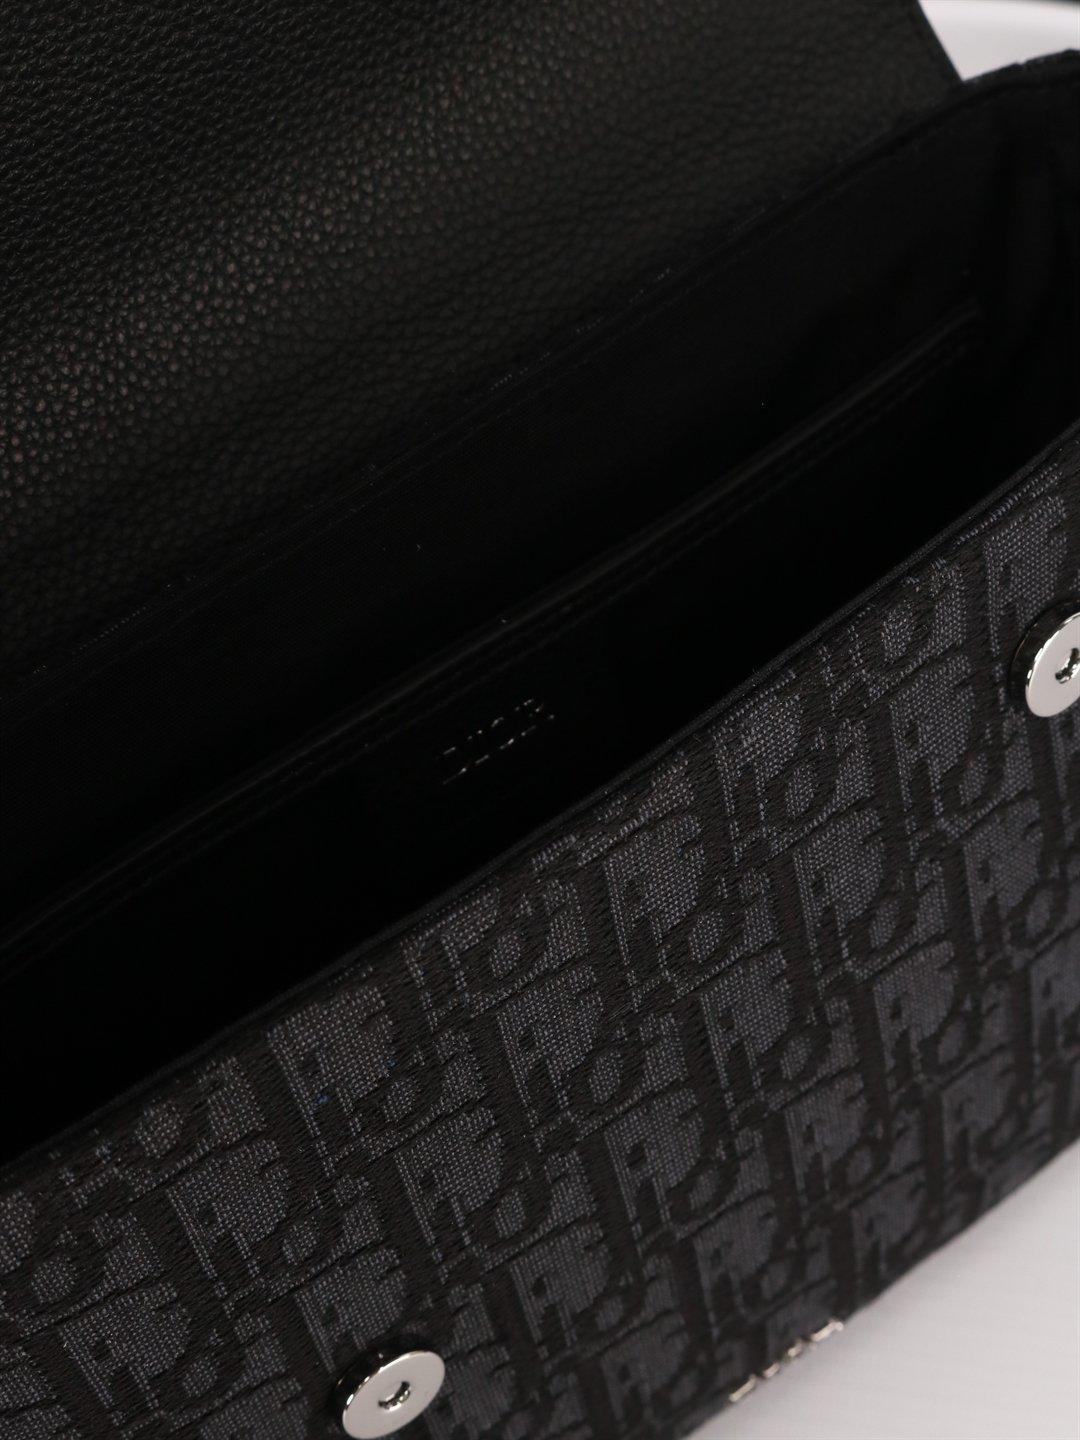 Mini Saddle Bag Beige and Black Dior Oblique Jacquard